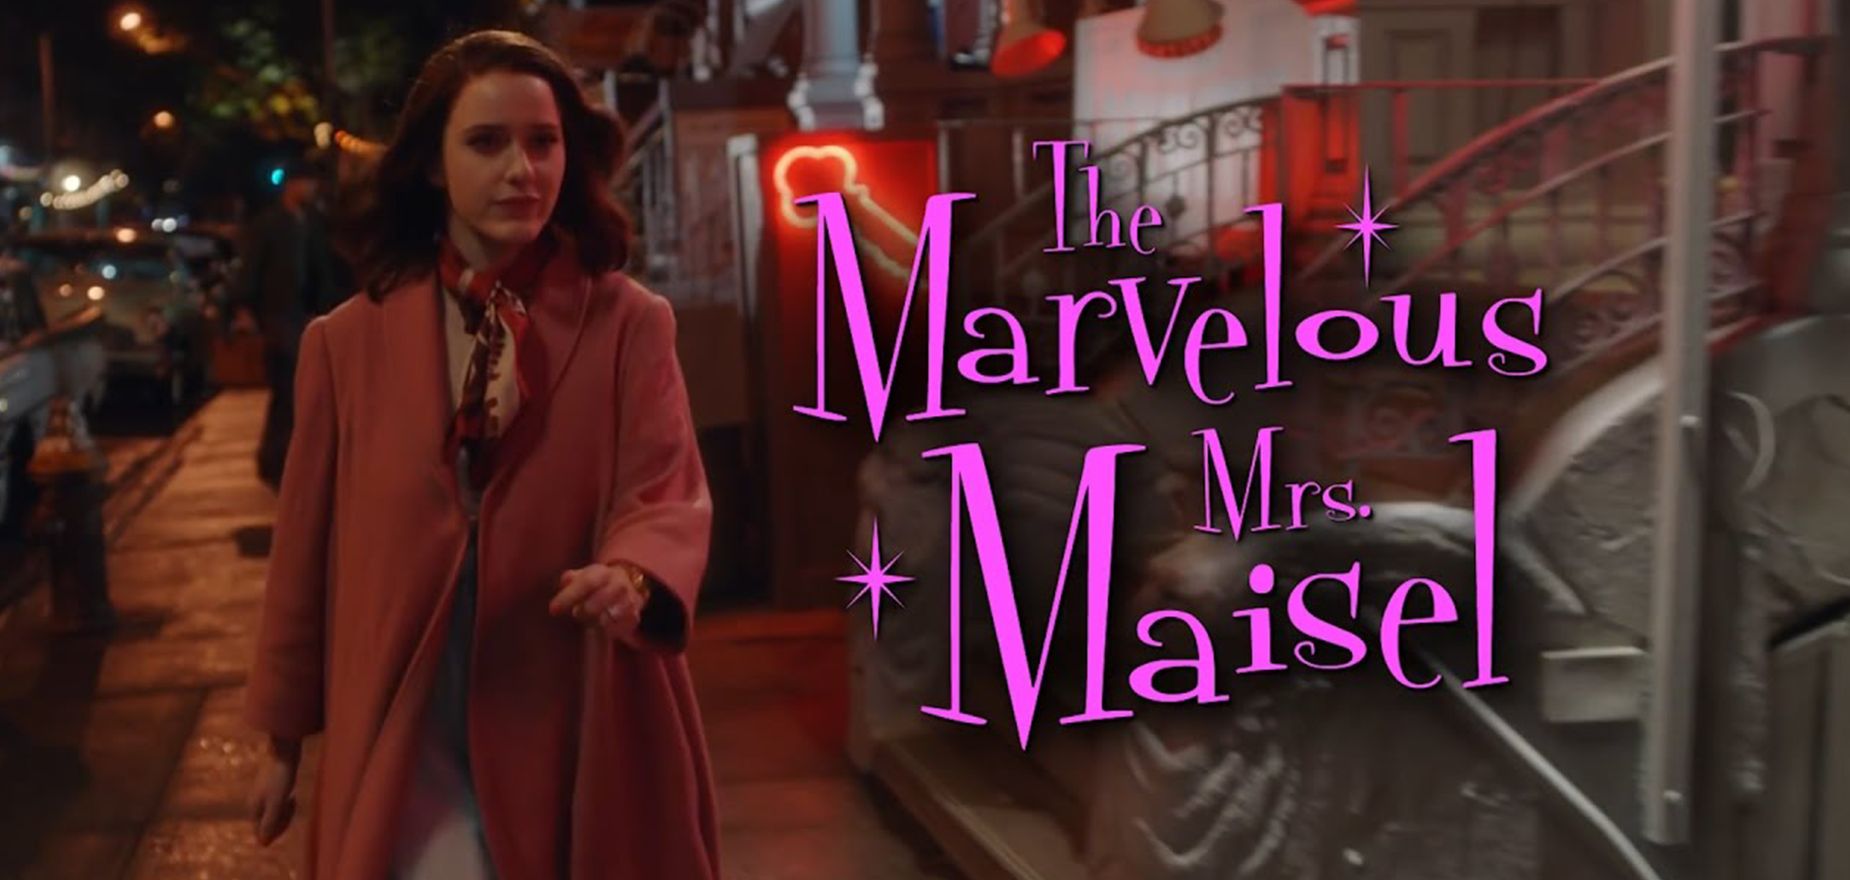 The Marvelous Mrs. Maisel - Amazon Studios